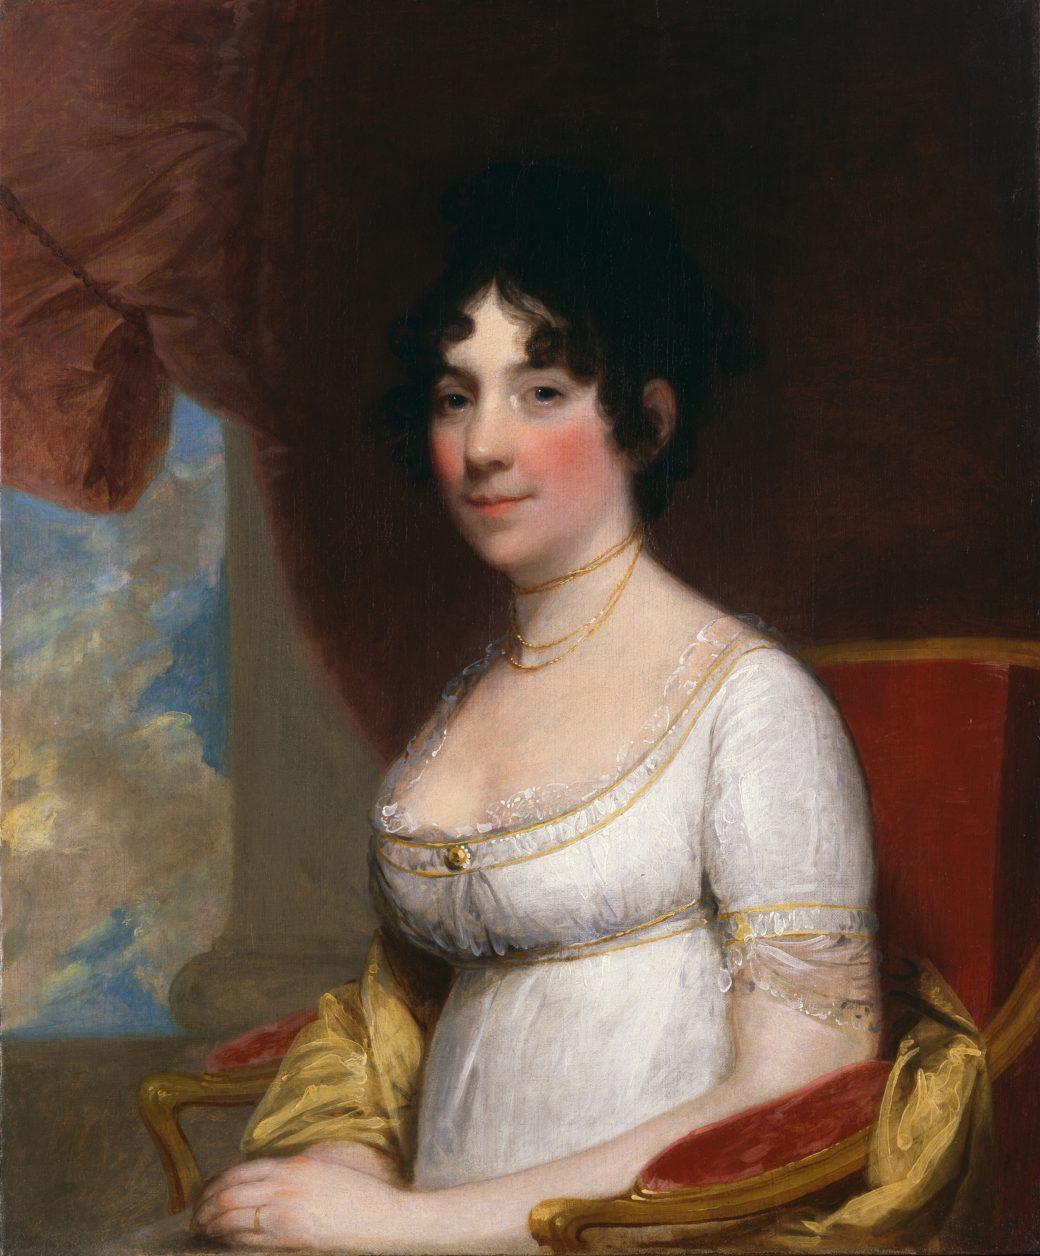 Portrait of Dolley Madison, 1804, by Gilbert Stuart. (Public Domain)